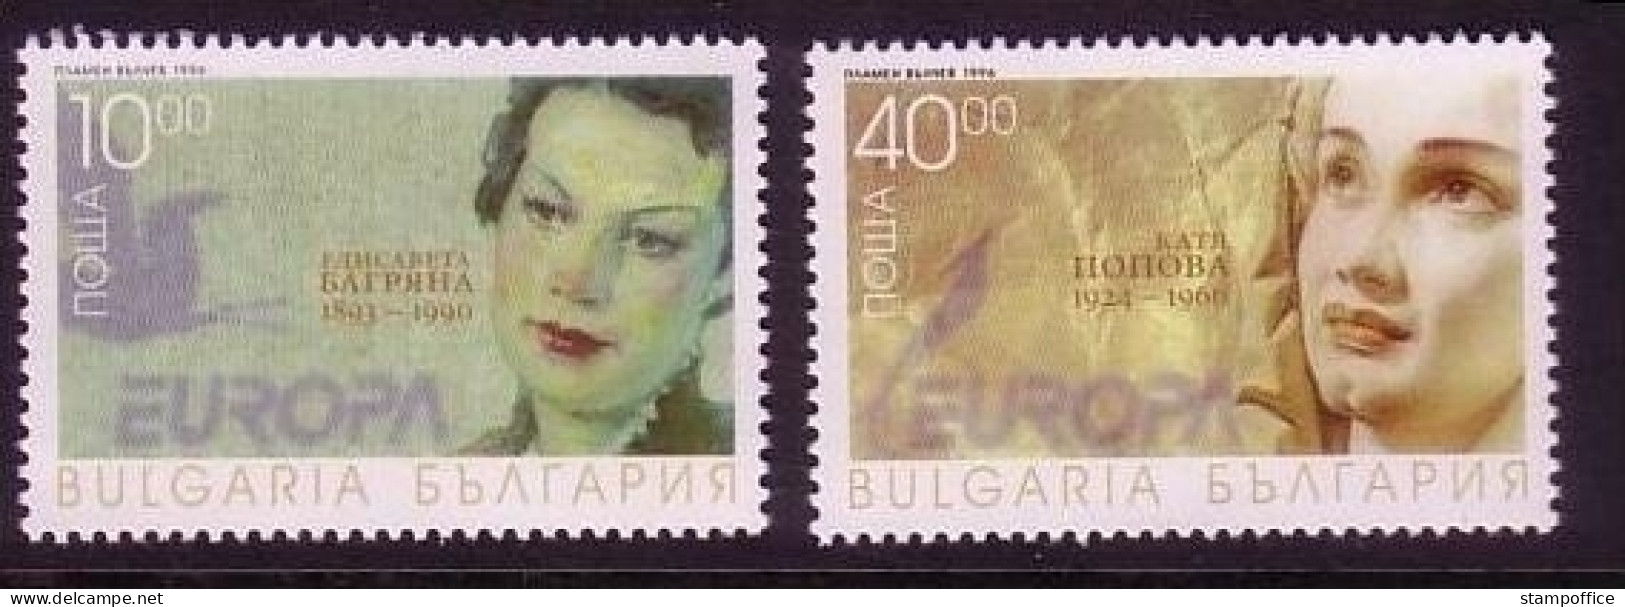 BULGARIEN MI-NR. 4223-4224 POSTFRISCH(MINT) EUROPA 1996 - BERÜHMTE FRAUEN - 1996